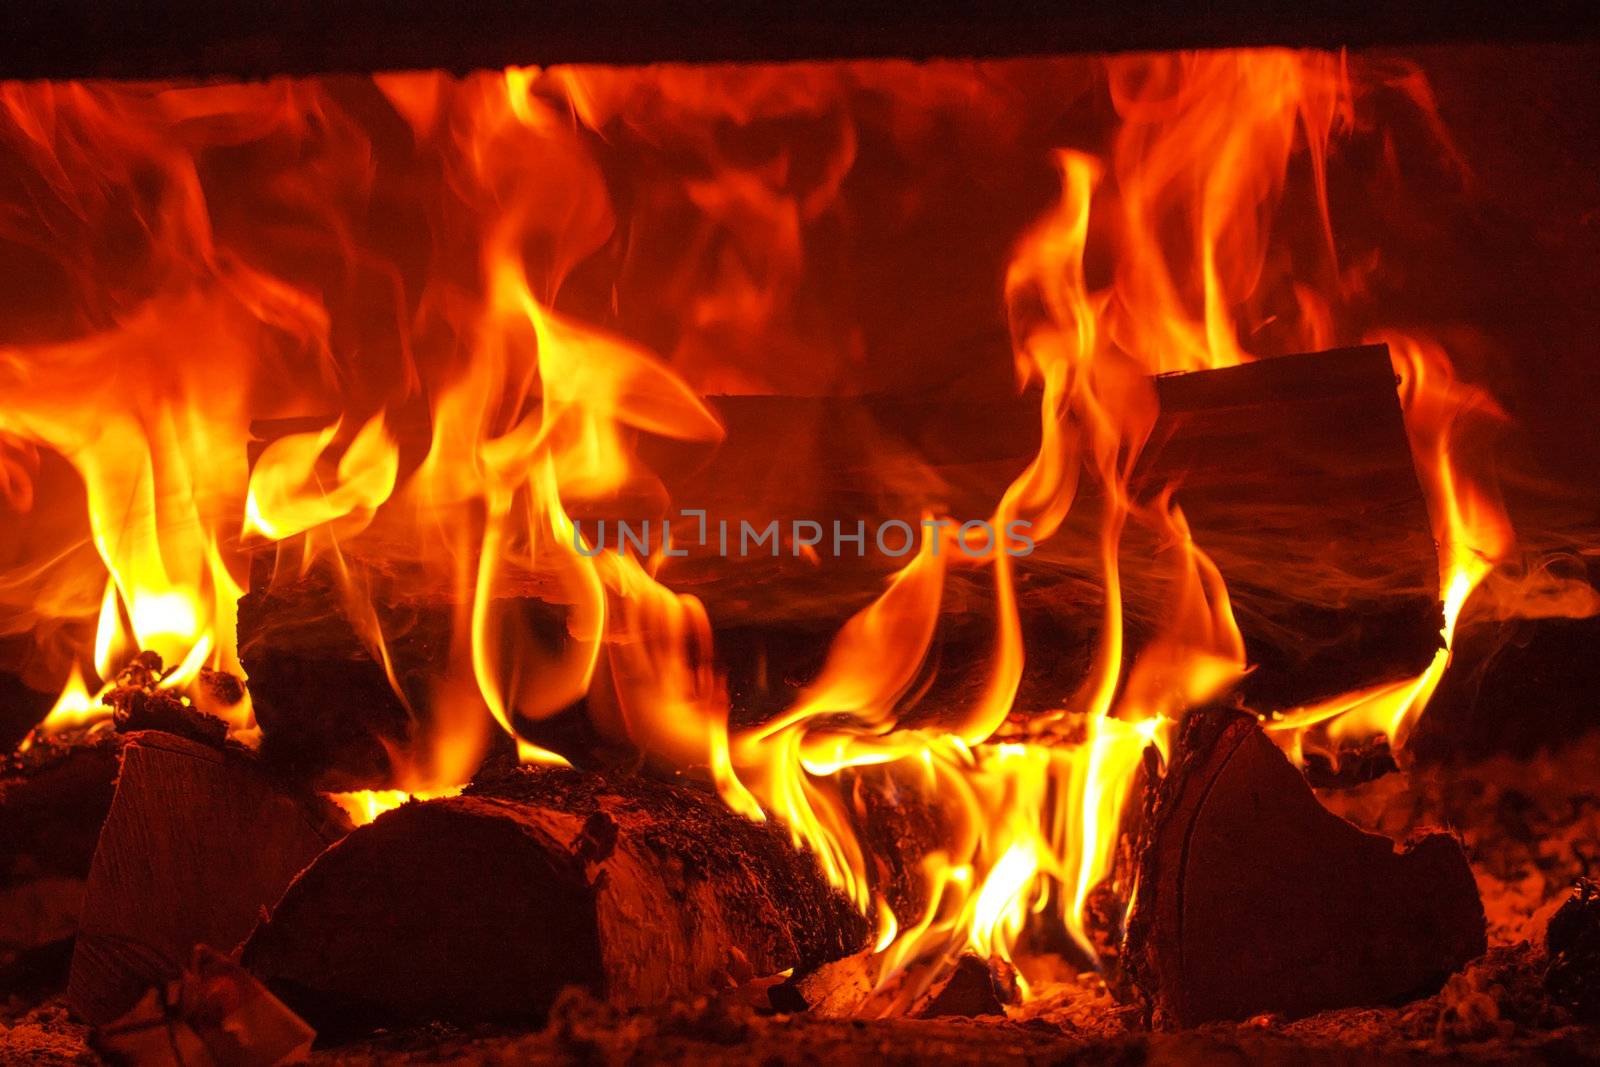 Fire in fireplace by shebeko